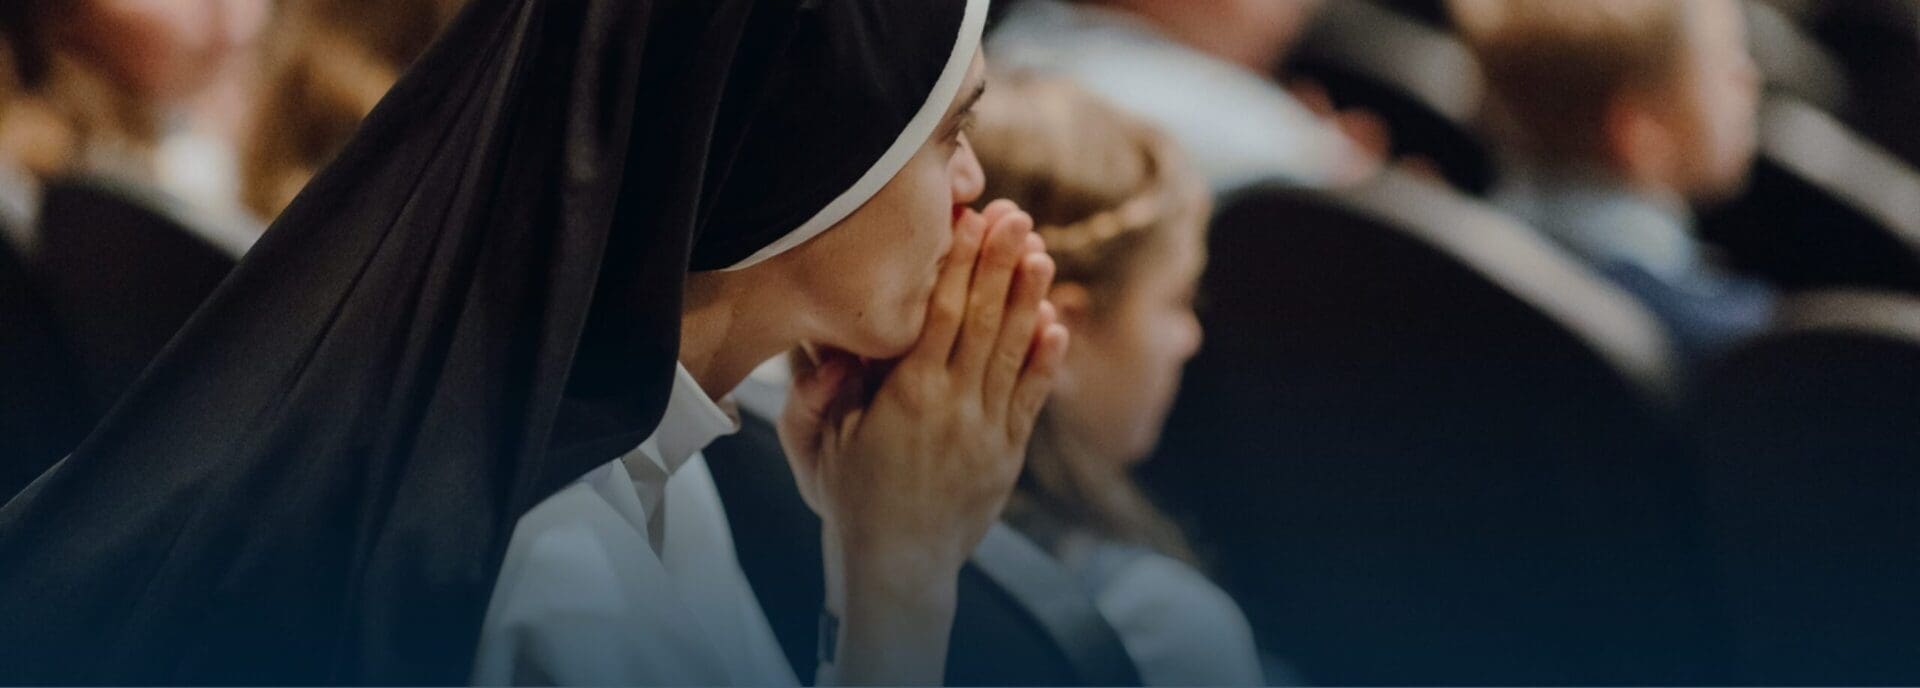 dominican sisters catholic religious vocations women prayer faith Reflections Hero